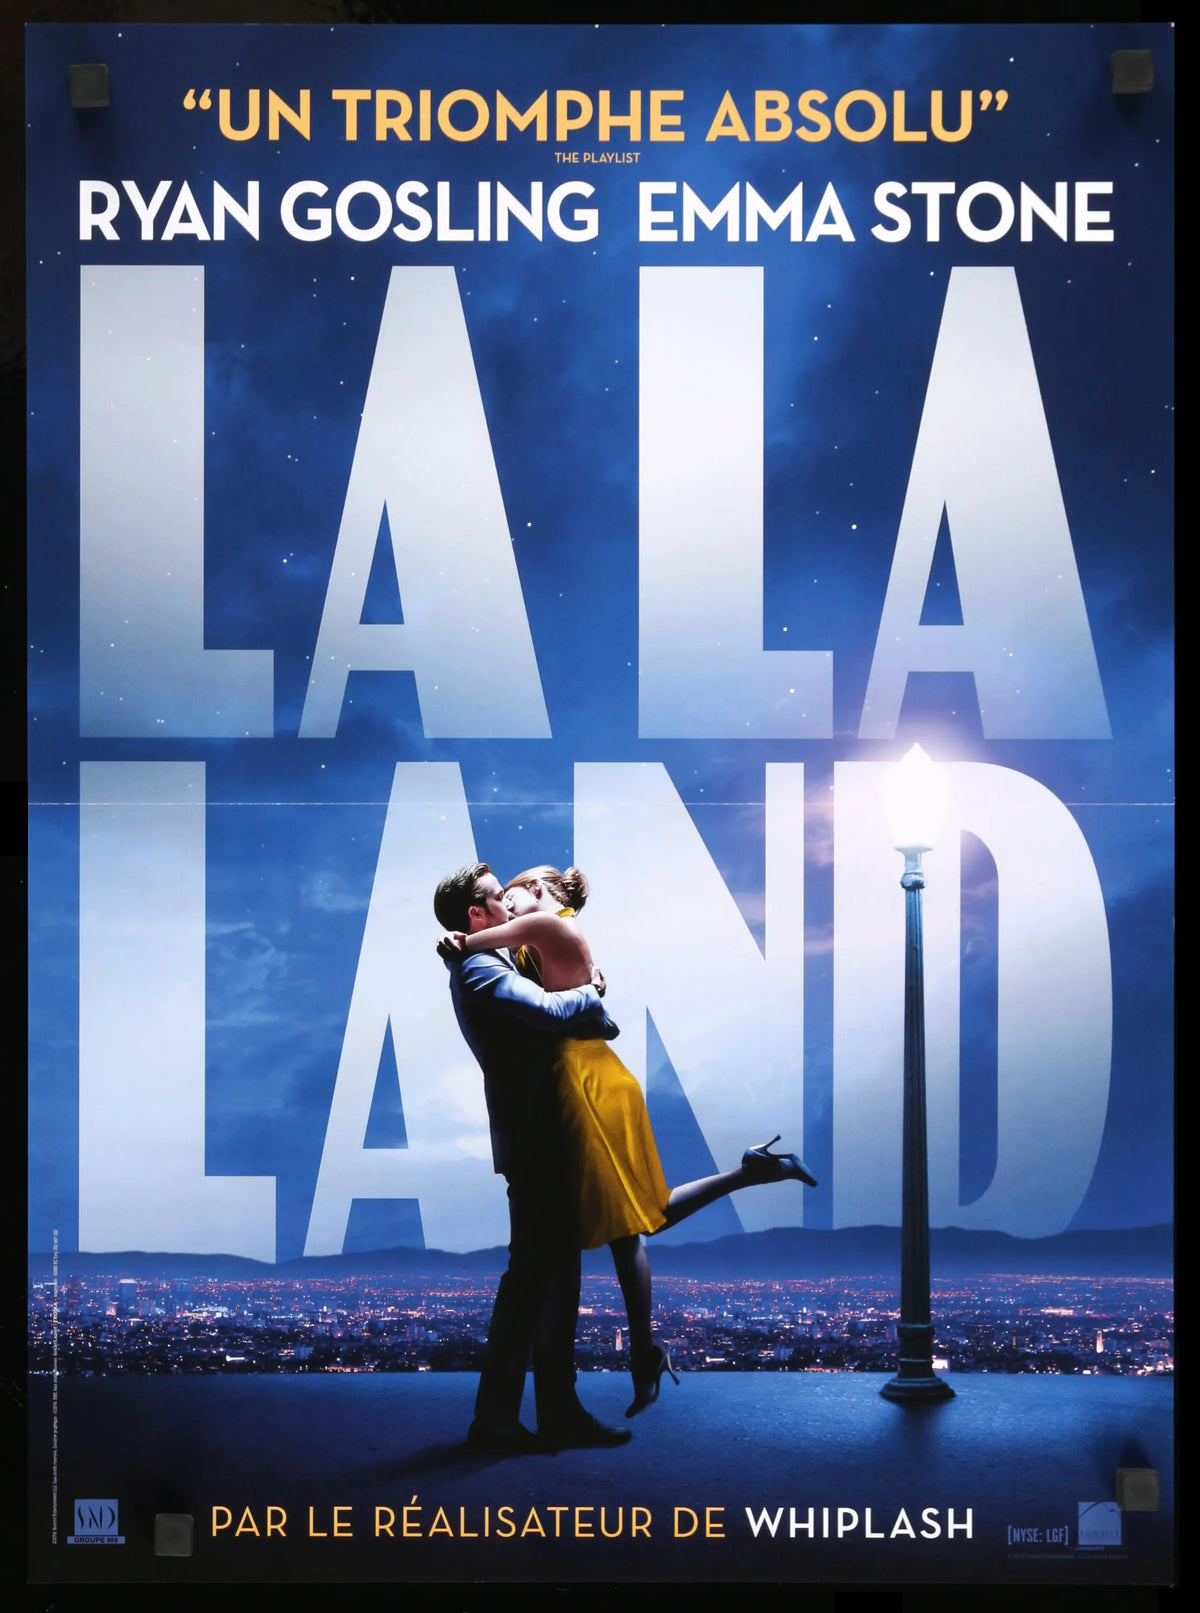 La La Land (2016) original movie poster for sale at Original Film Art